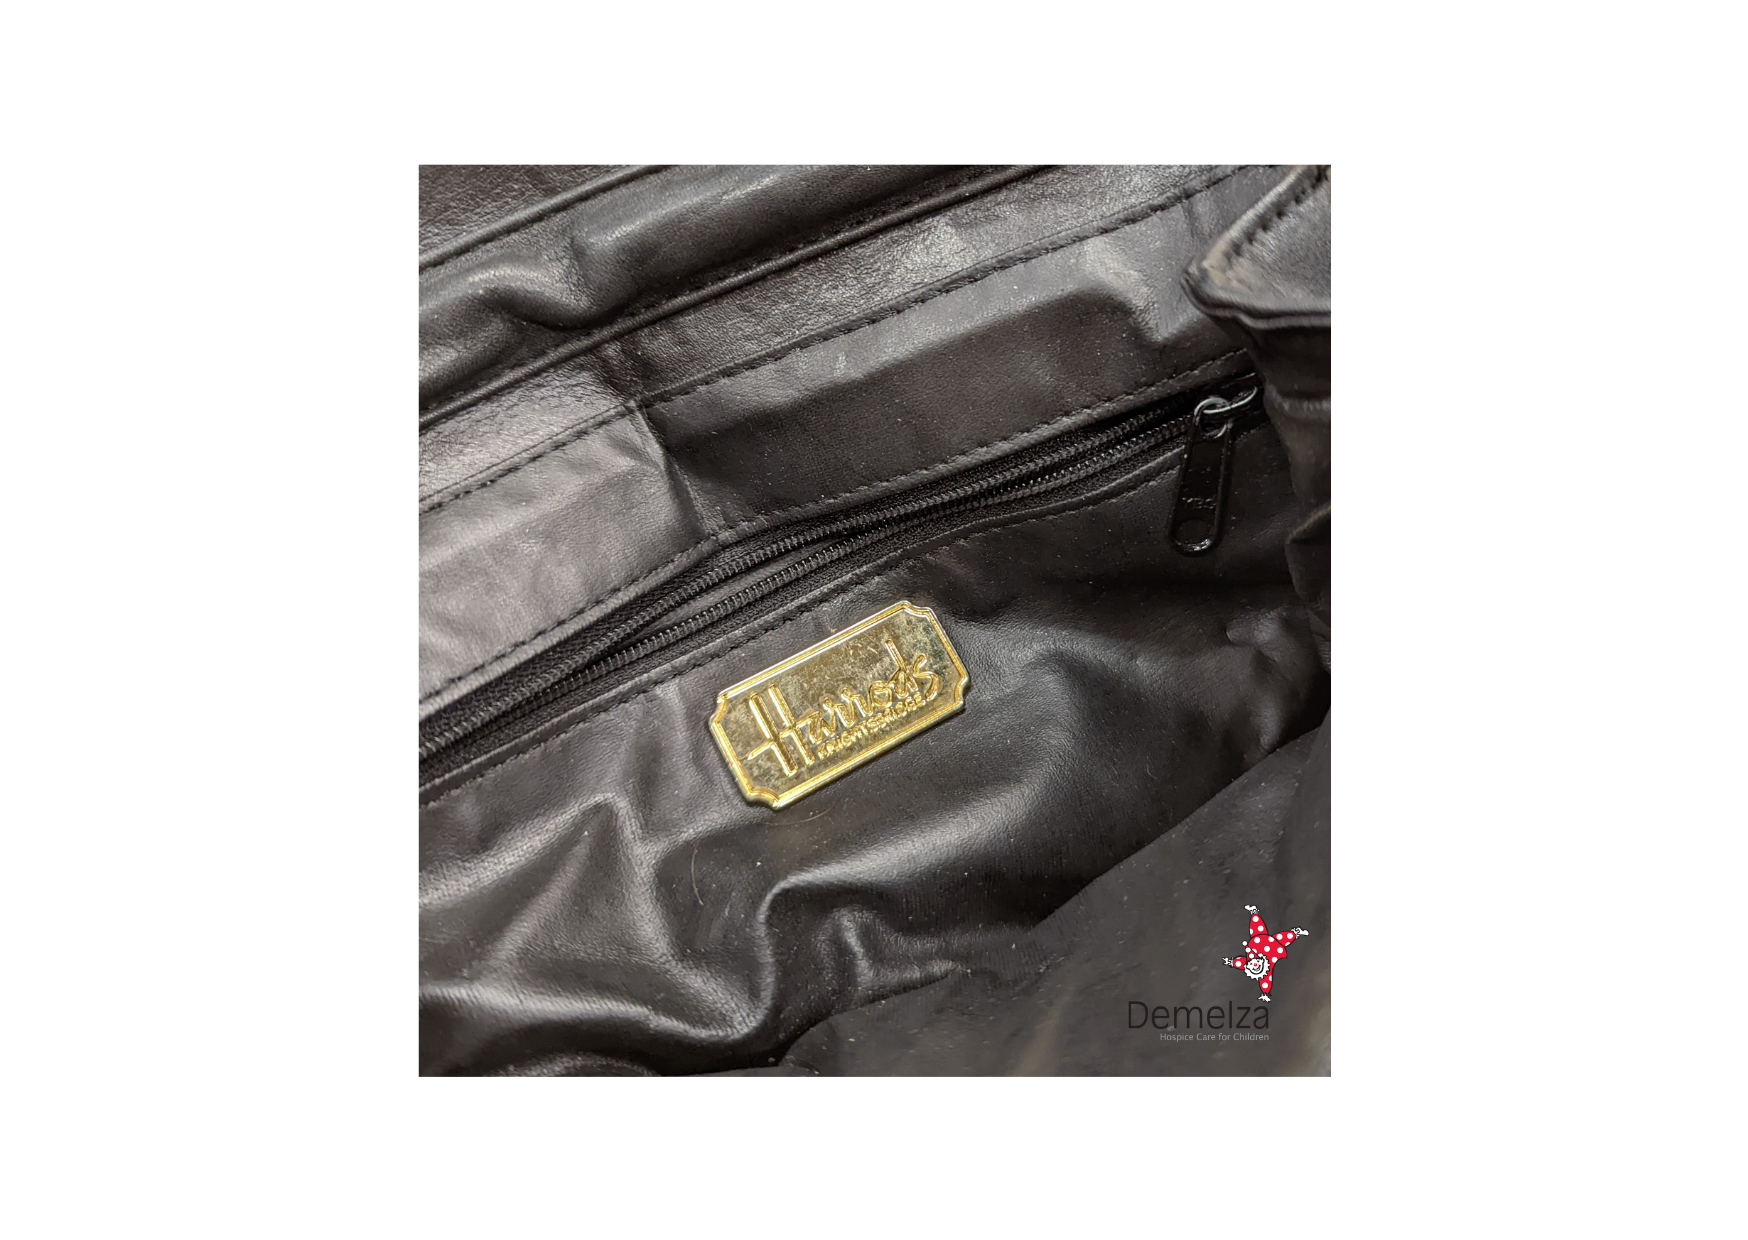 Black quilted Harrods handbag with gold detailing